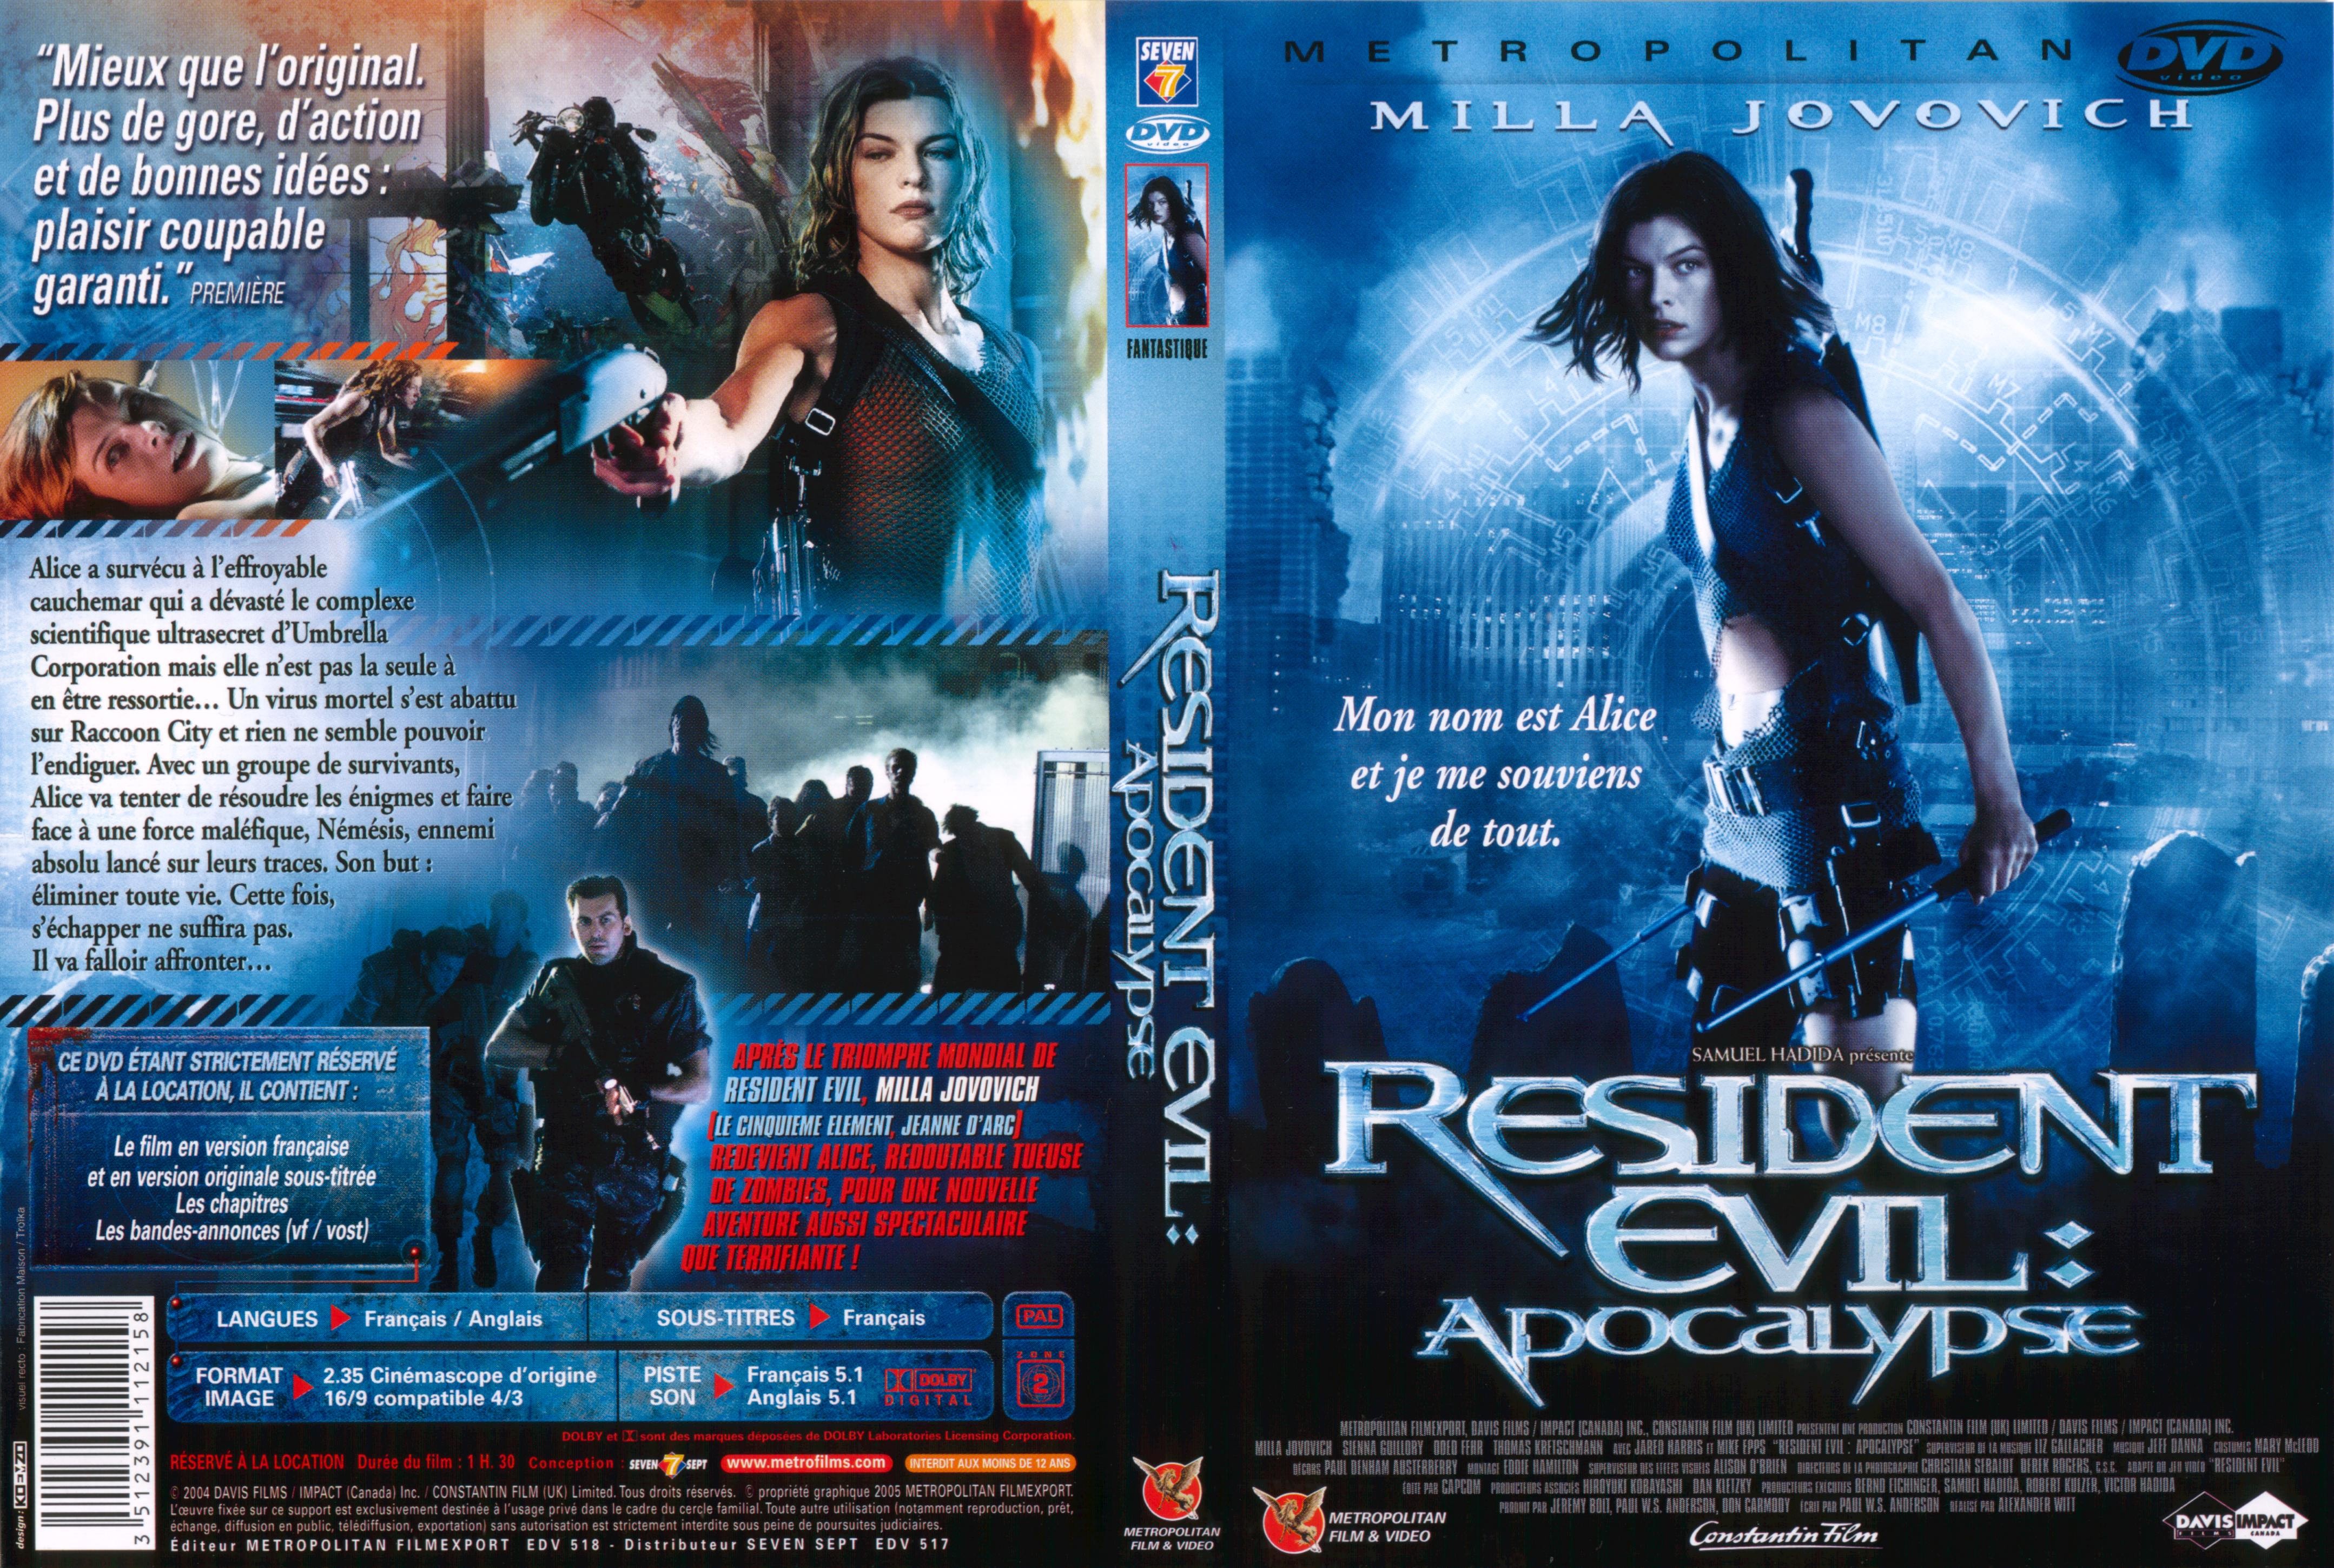 Jaquette DVD Resident evil 2 apocalypse